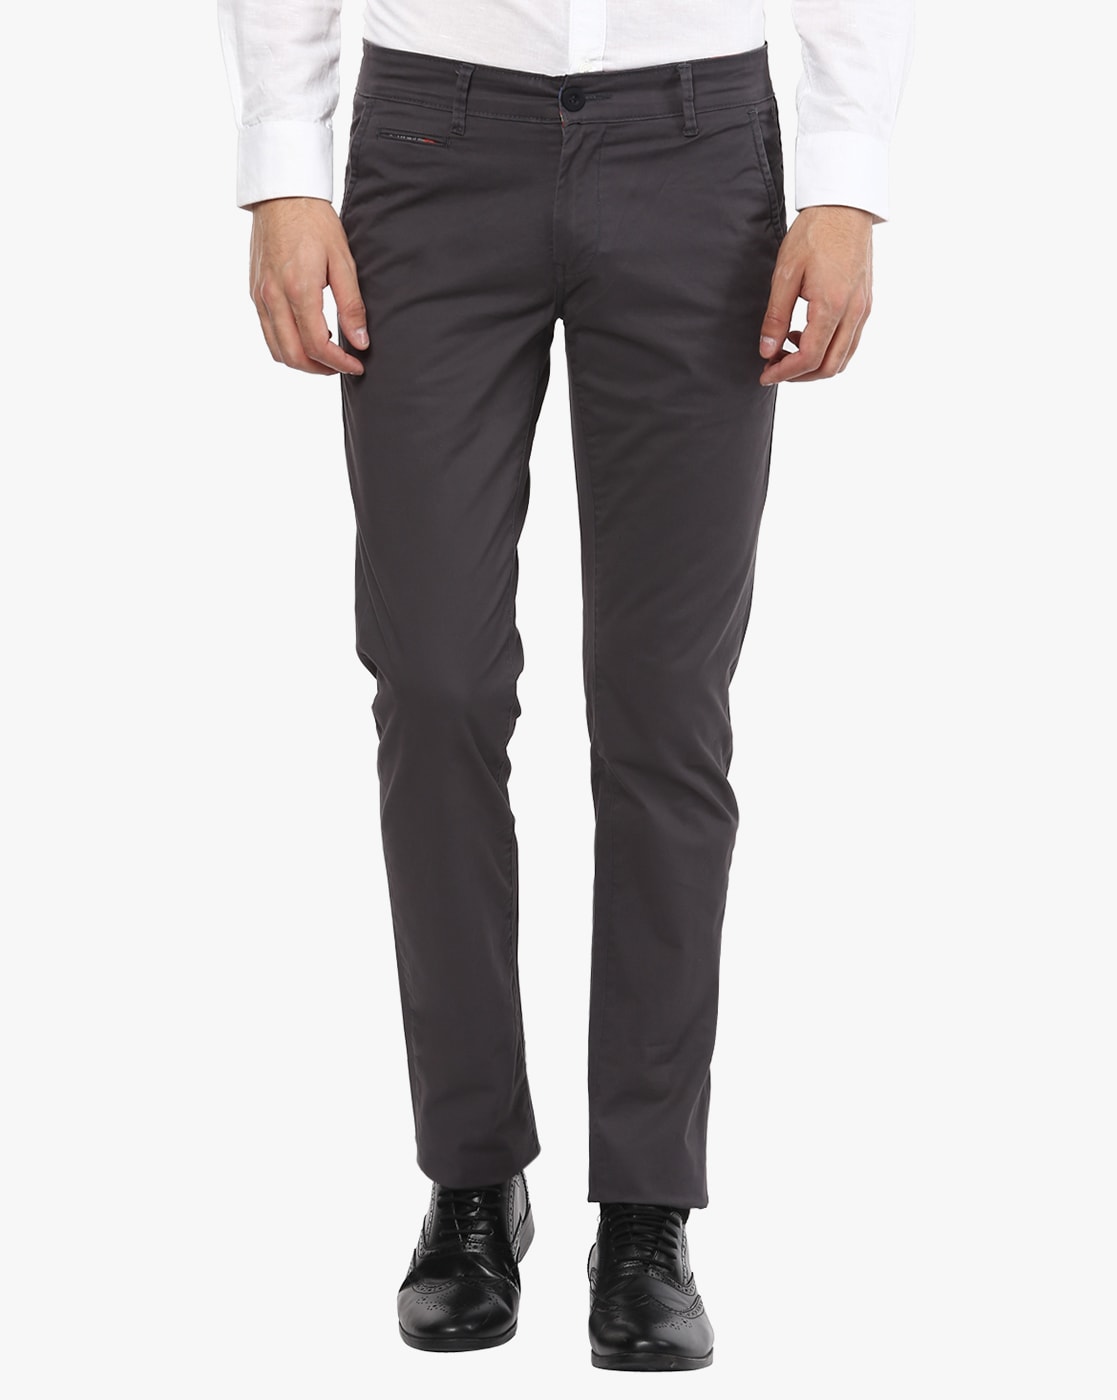 Buy Mufti Men's Super Slim Casual Trousers (MFT-16915-G-01-BLACK_Black_40)  at Amazon.in